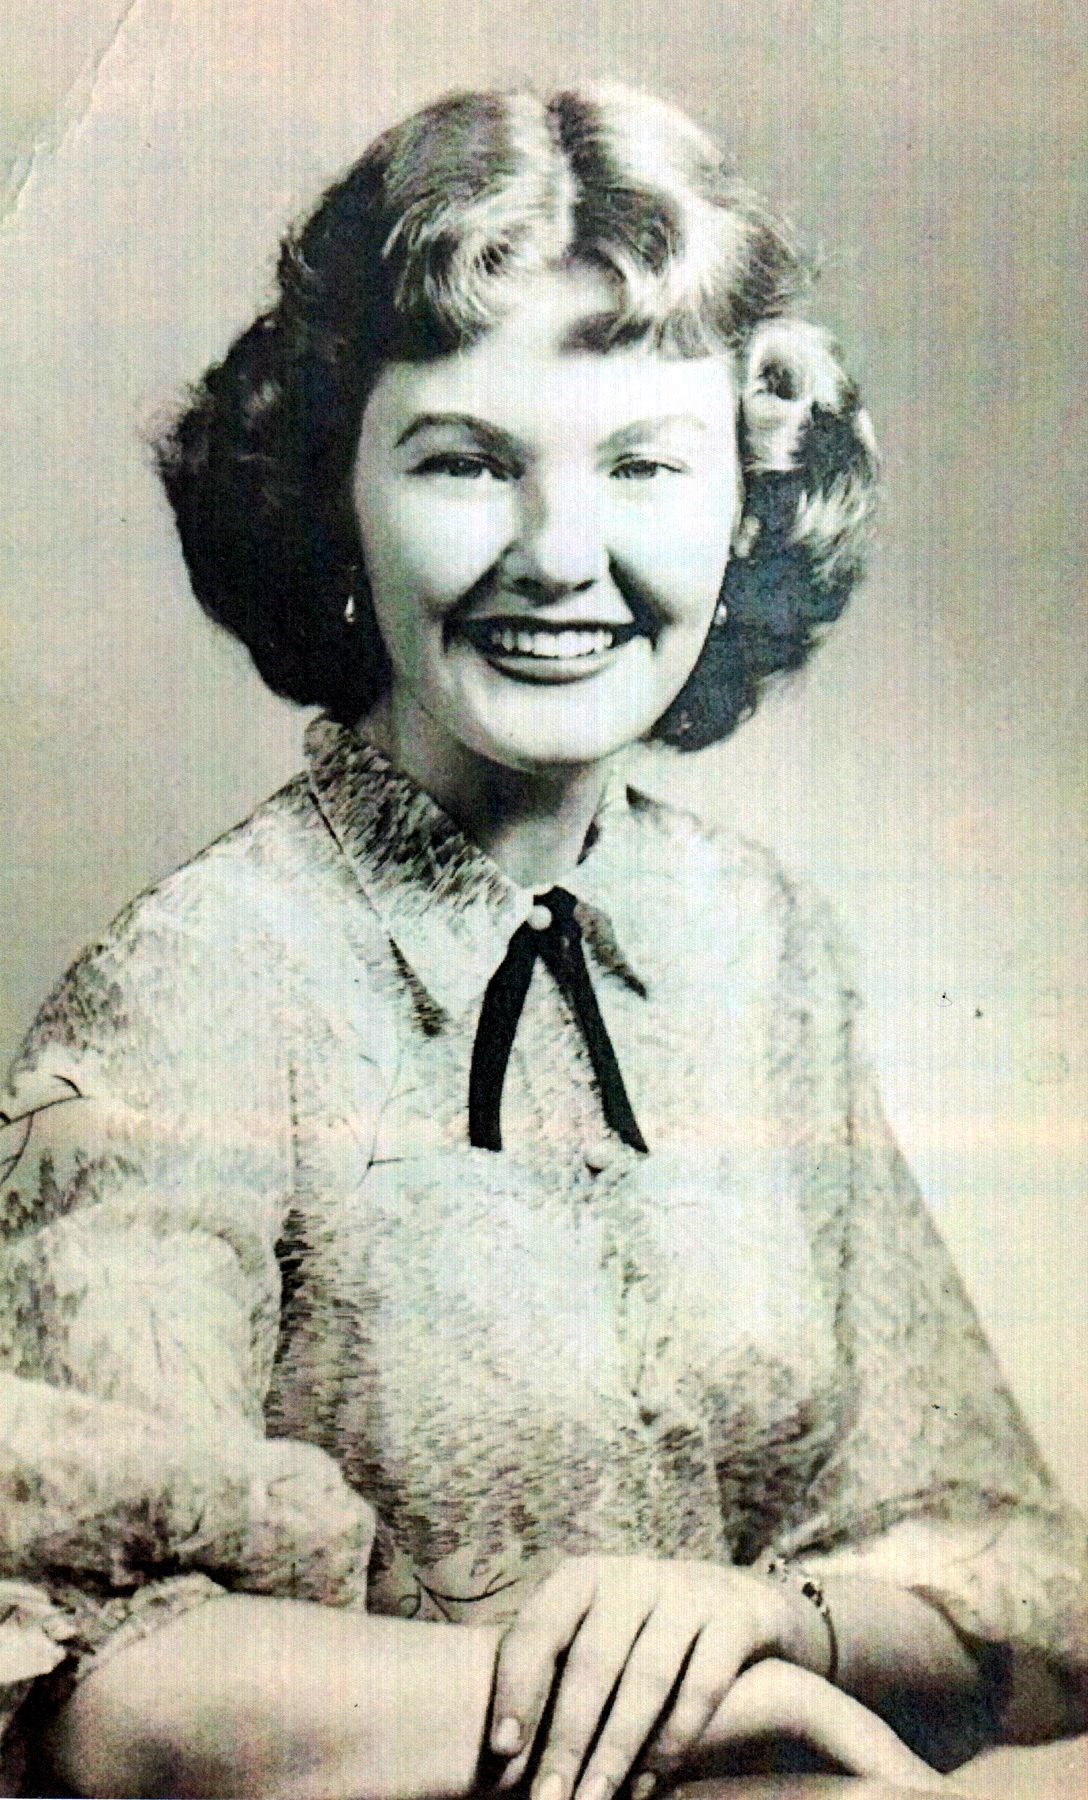 Obituary of Norma Jean Stroud - 21 diciembre, 2018 - DE LA FAMILIA